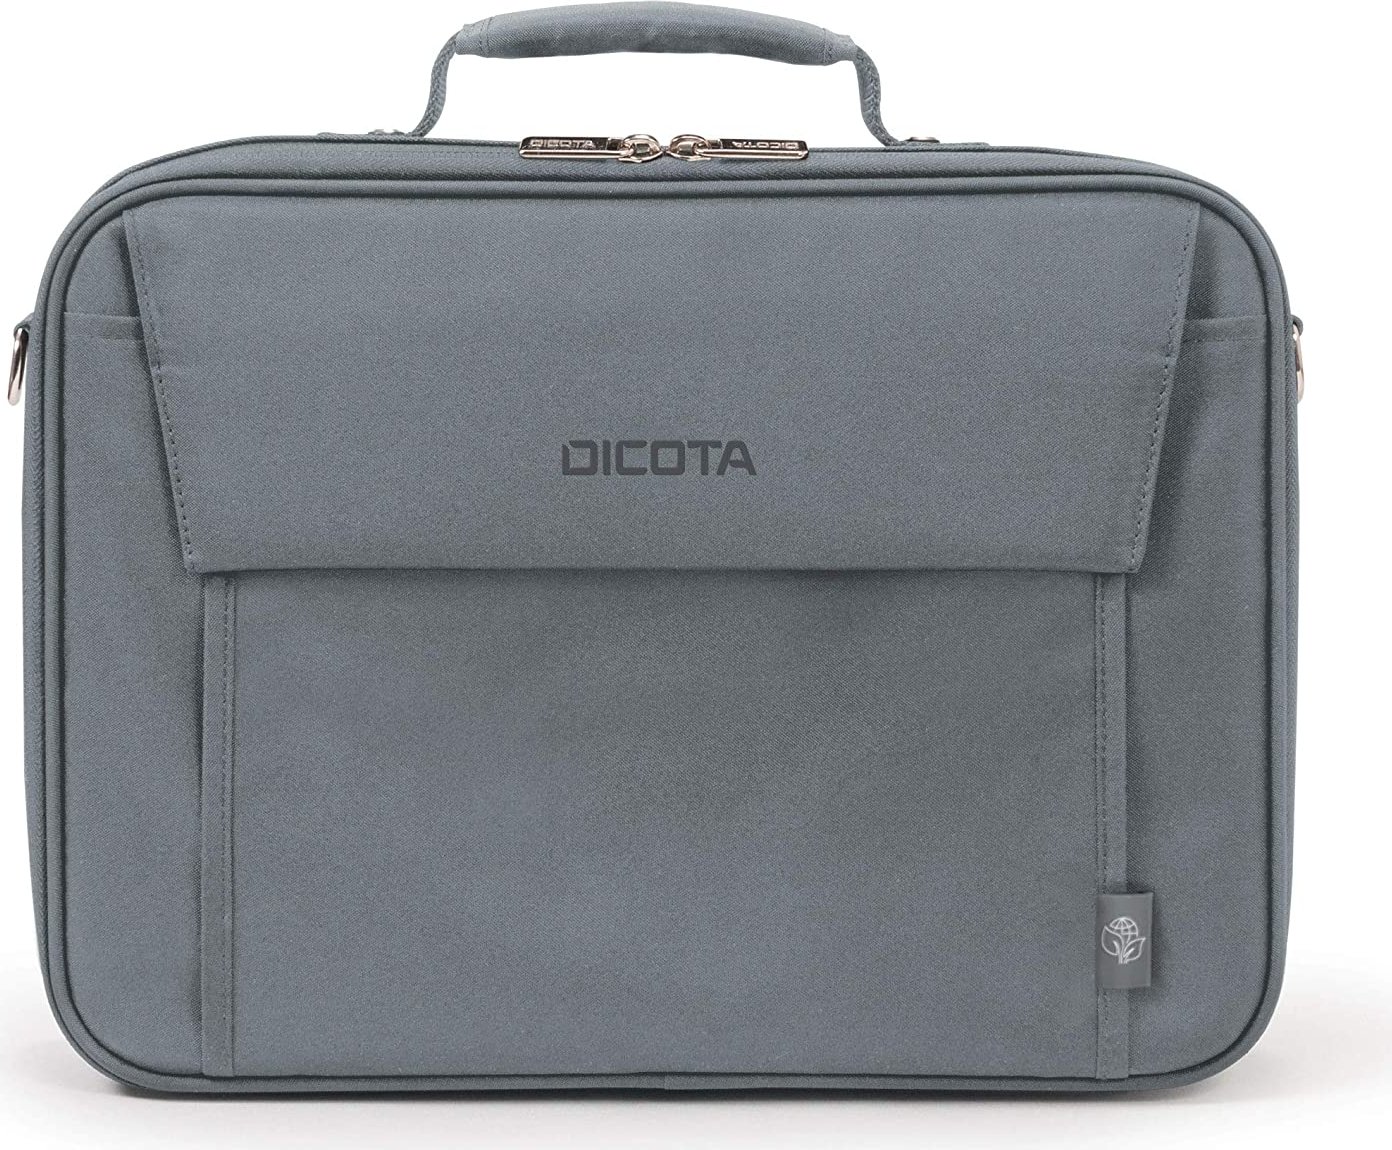 15-17.3" Dicota Eco Multi Base Notebooktasche, grau